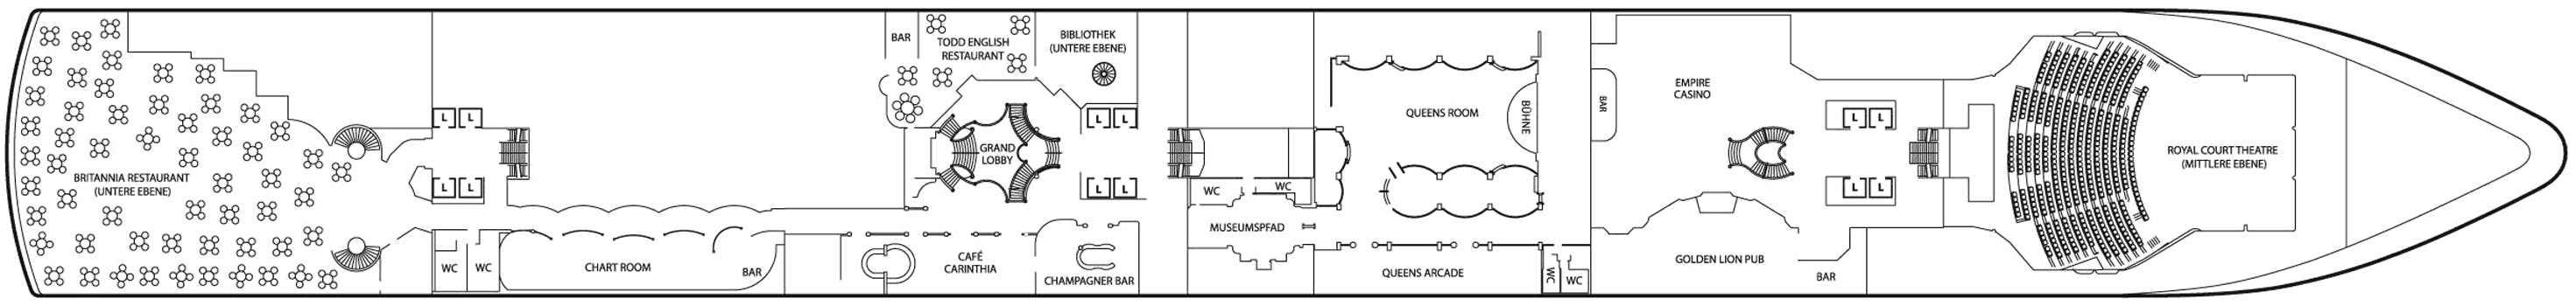 Queen Victoria - Cunard Line - Deck 2 (Deck 2)